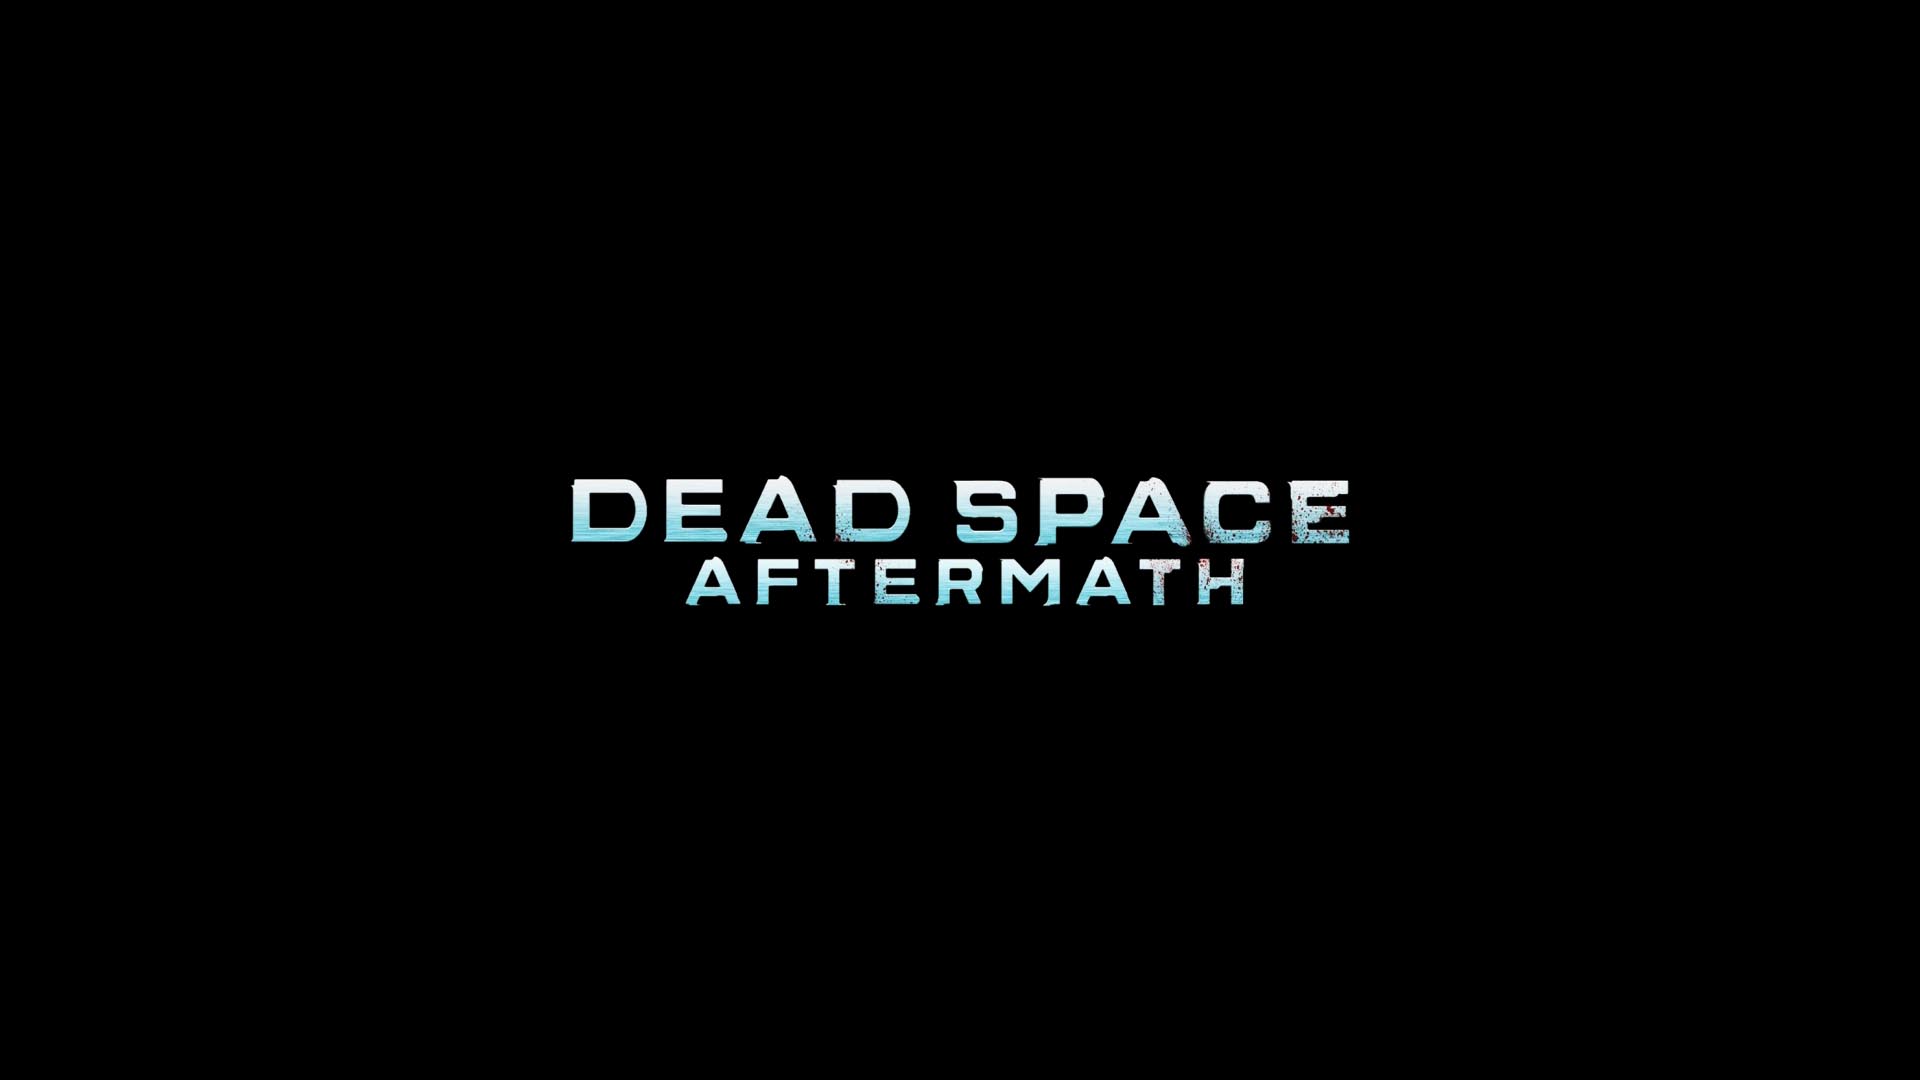 Movie Dead Space: Aftermath HD Wallpaper